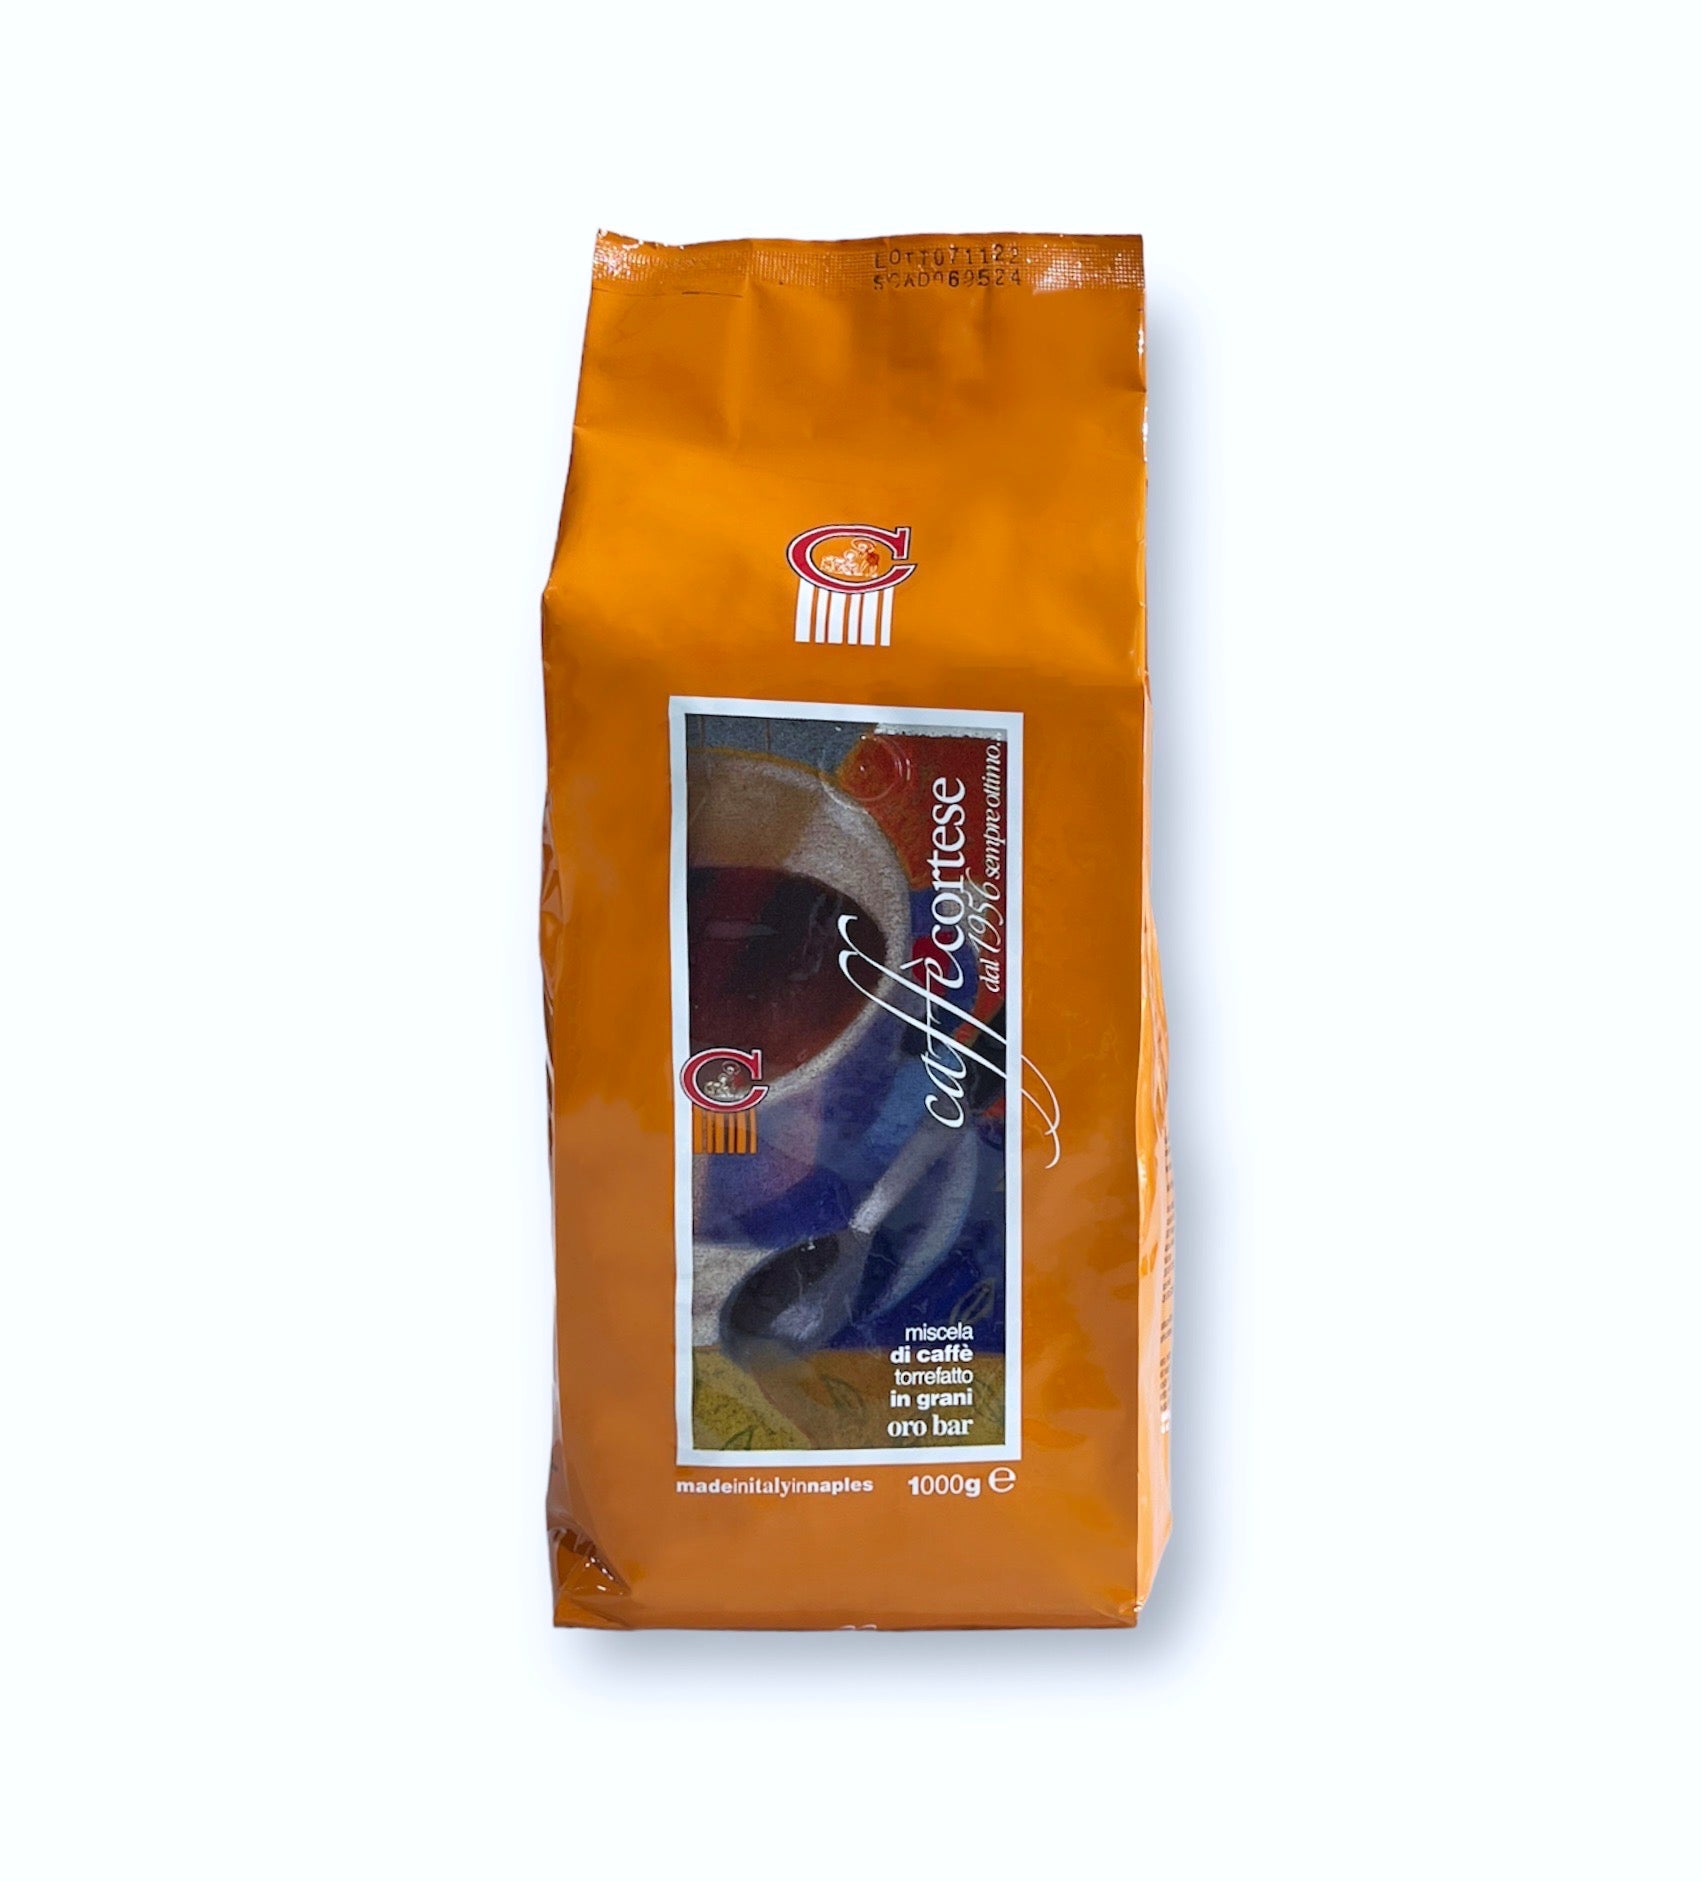 Caffe Cortese 1000g *Orange Bag*